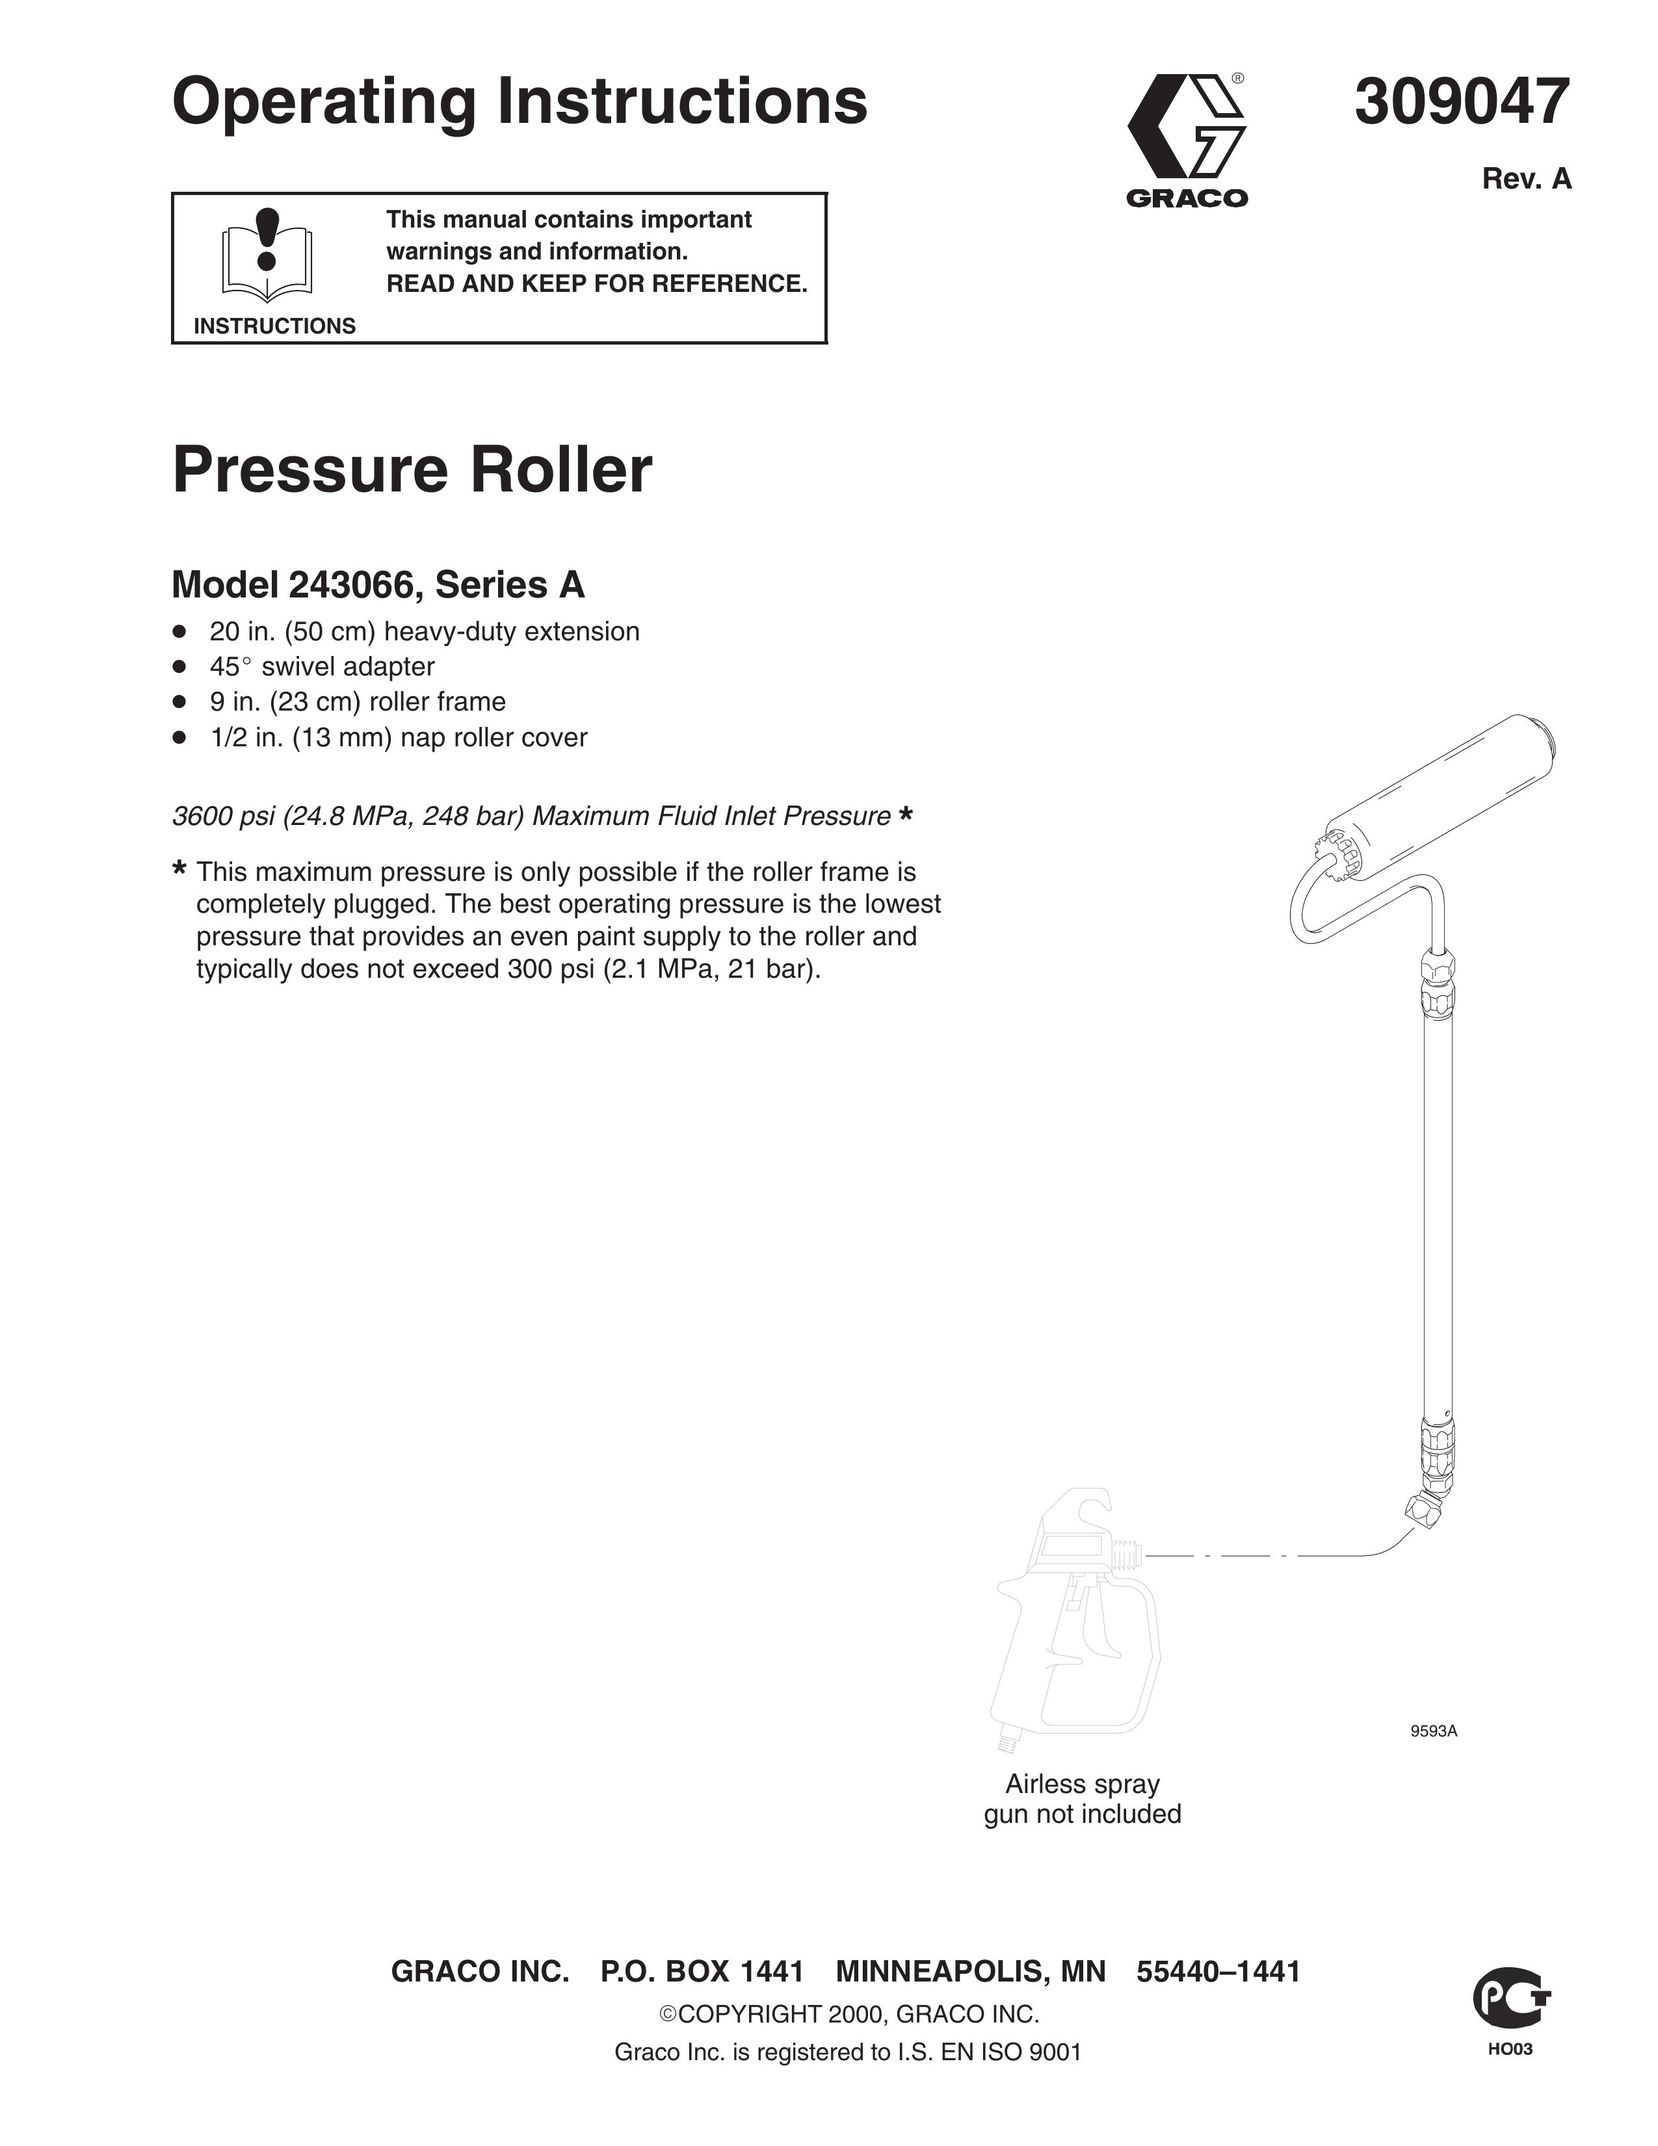 Graco Inc. 9593A Power Roller User Manual